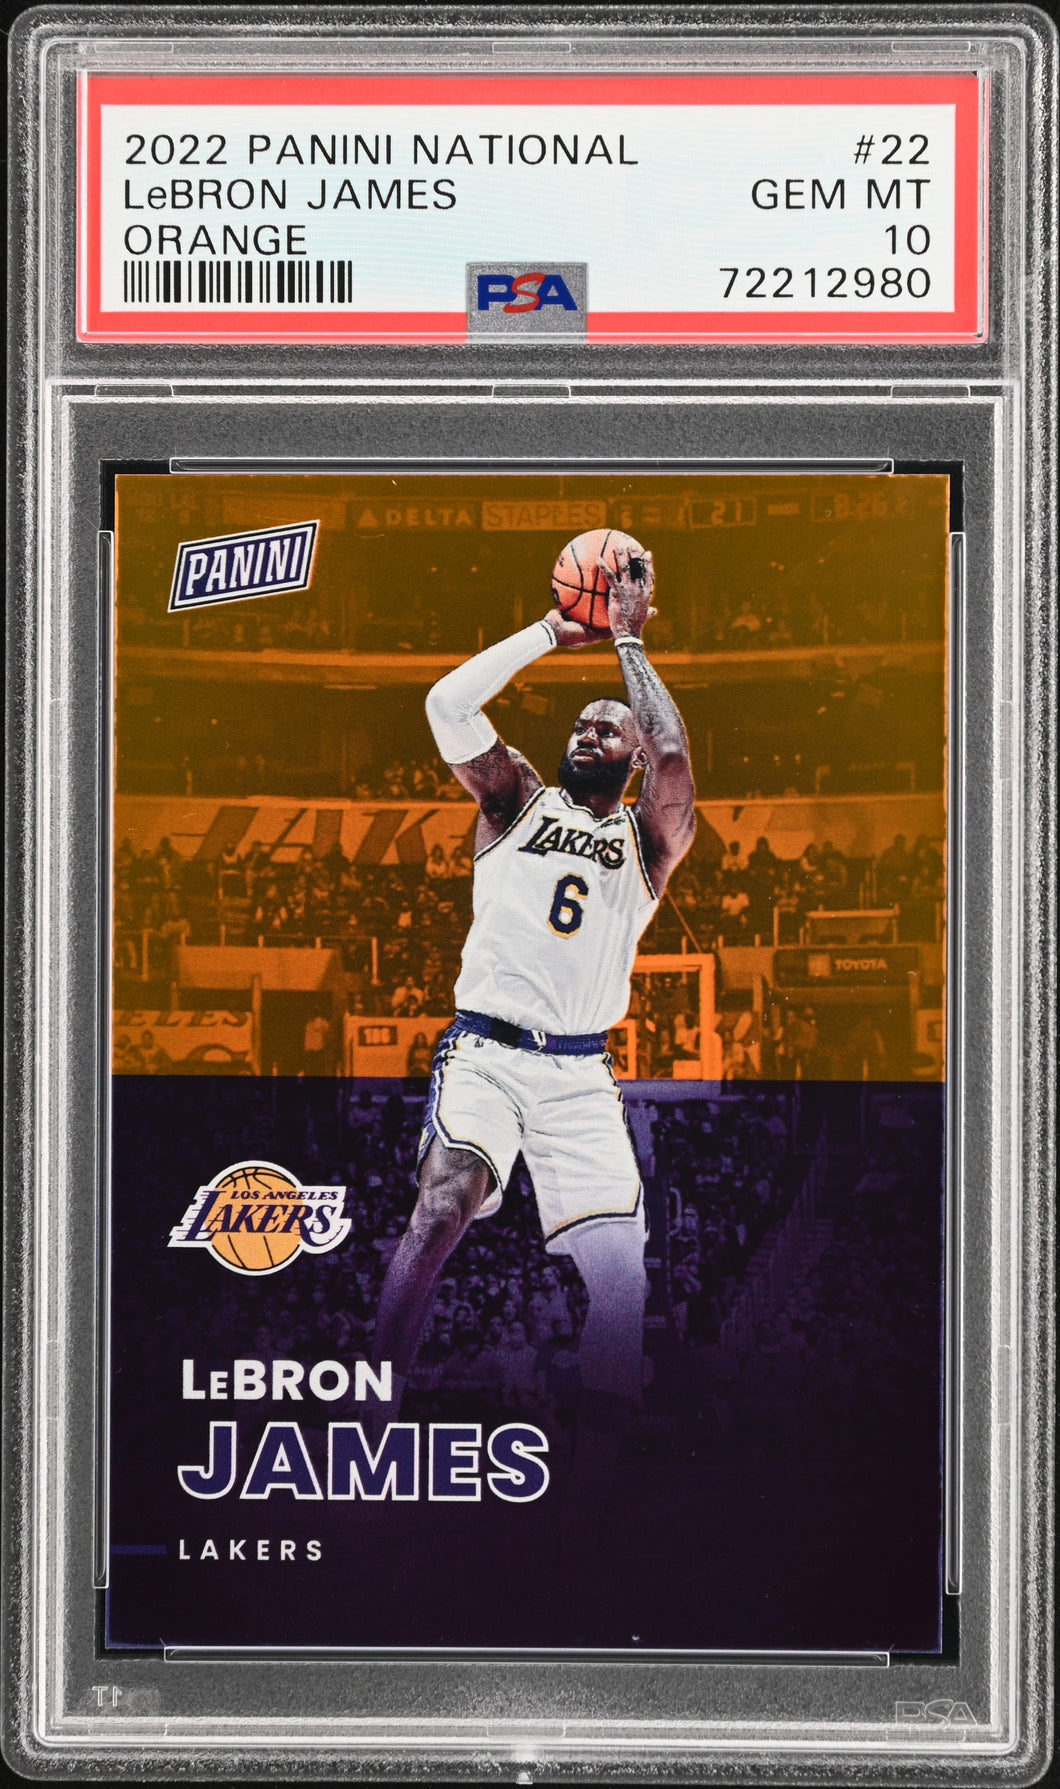 2022-23 Panini National Orange #22 LeBron James /199 Lakers PSA 10